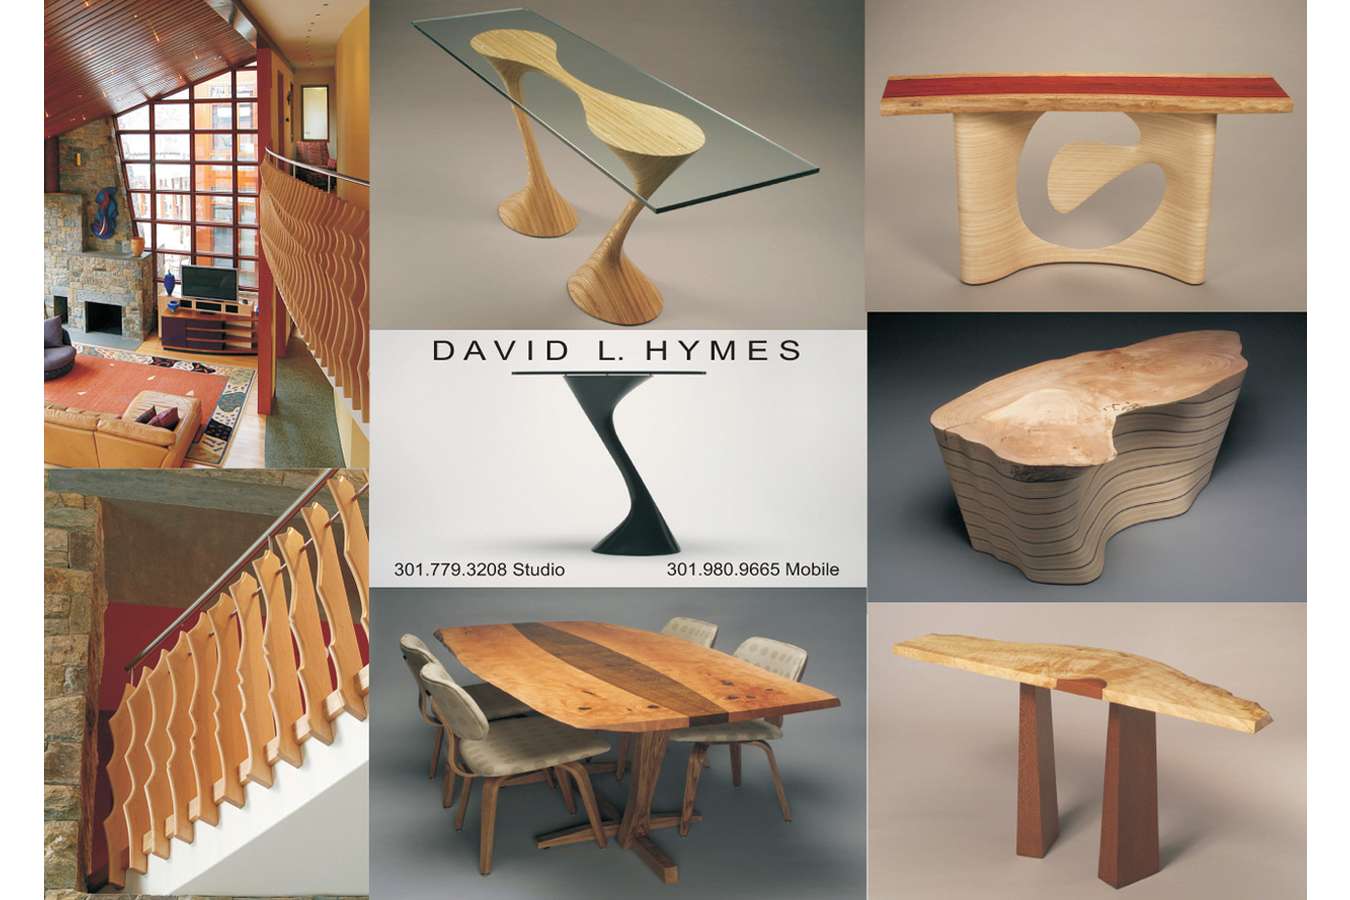 Hymes : Postcard accompanies custom portfolio package developed for furniture craftsman